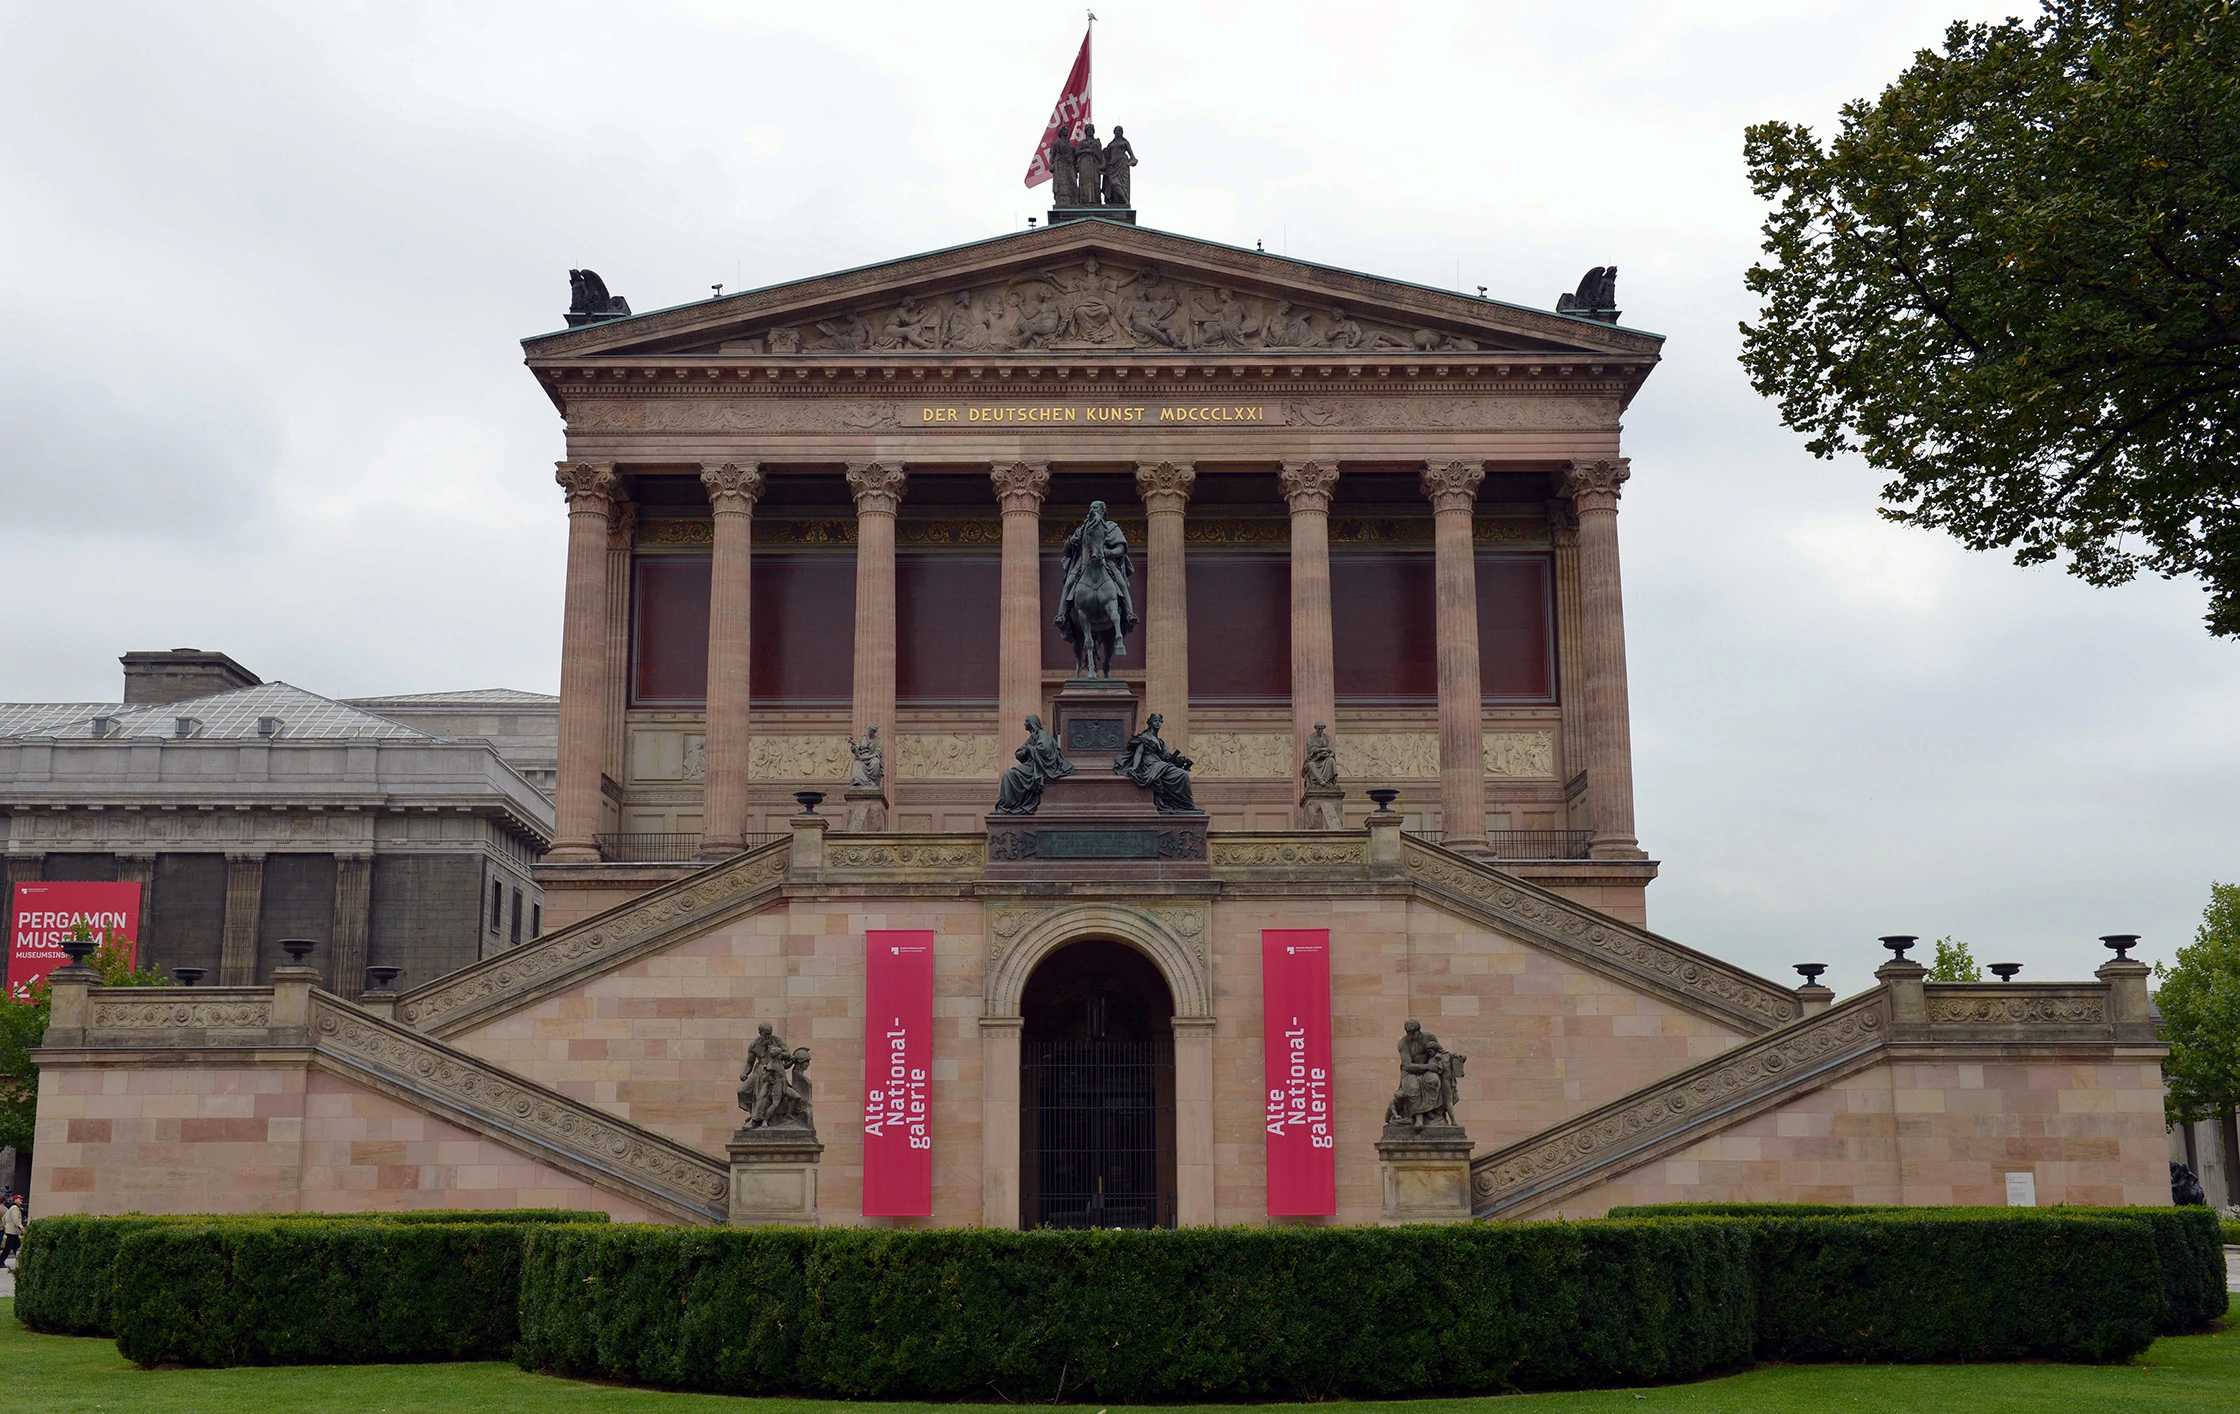 Alte Nationalgalerie, Germany